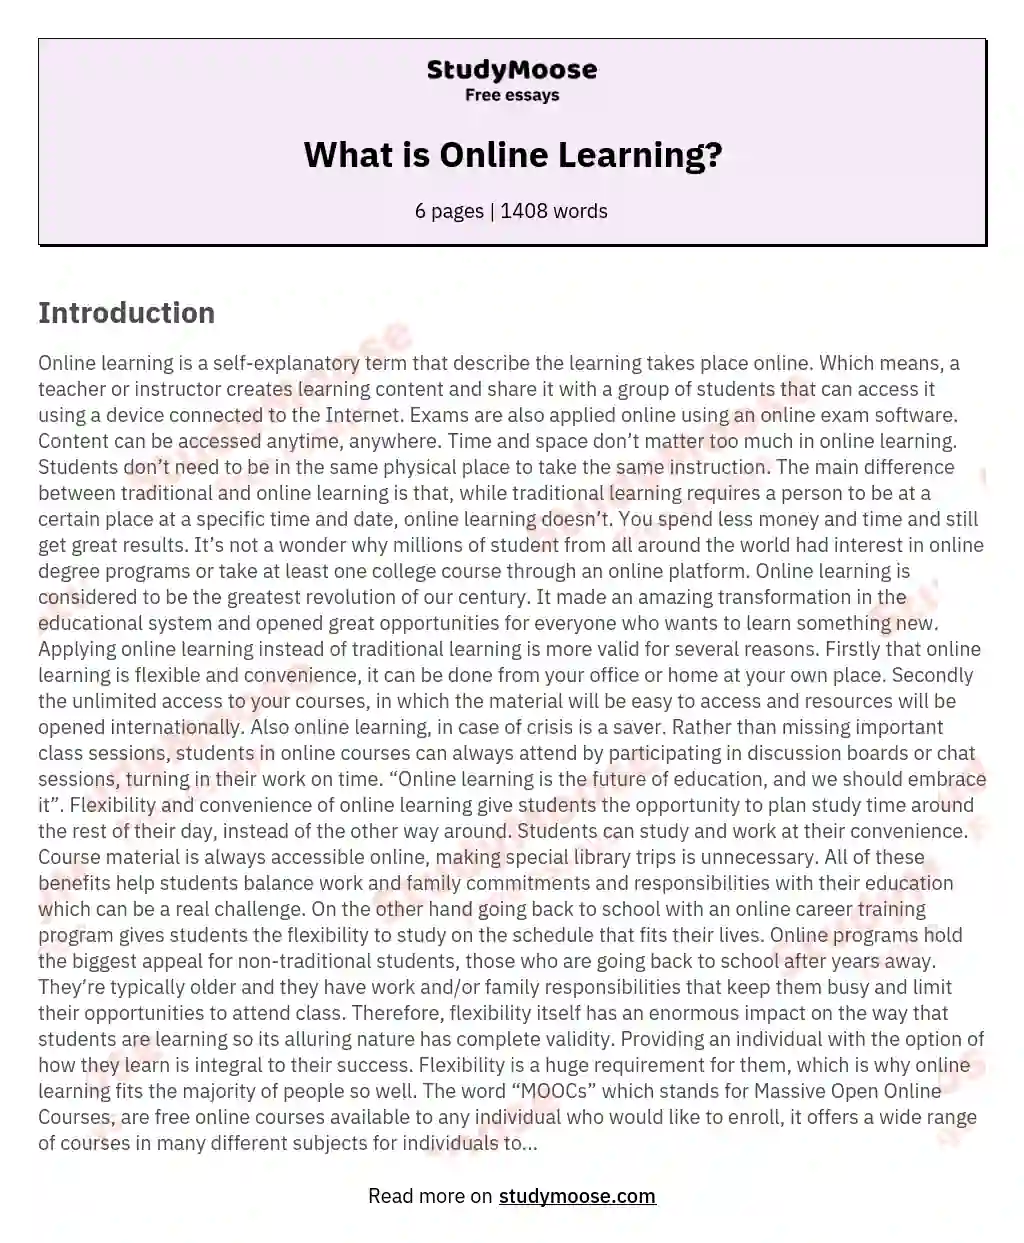 essay writing online education